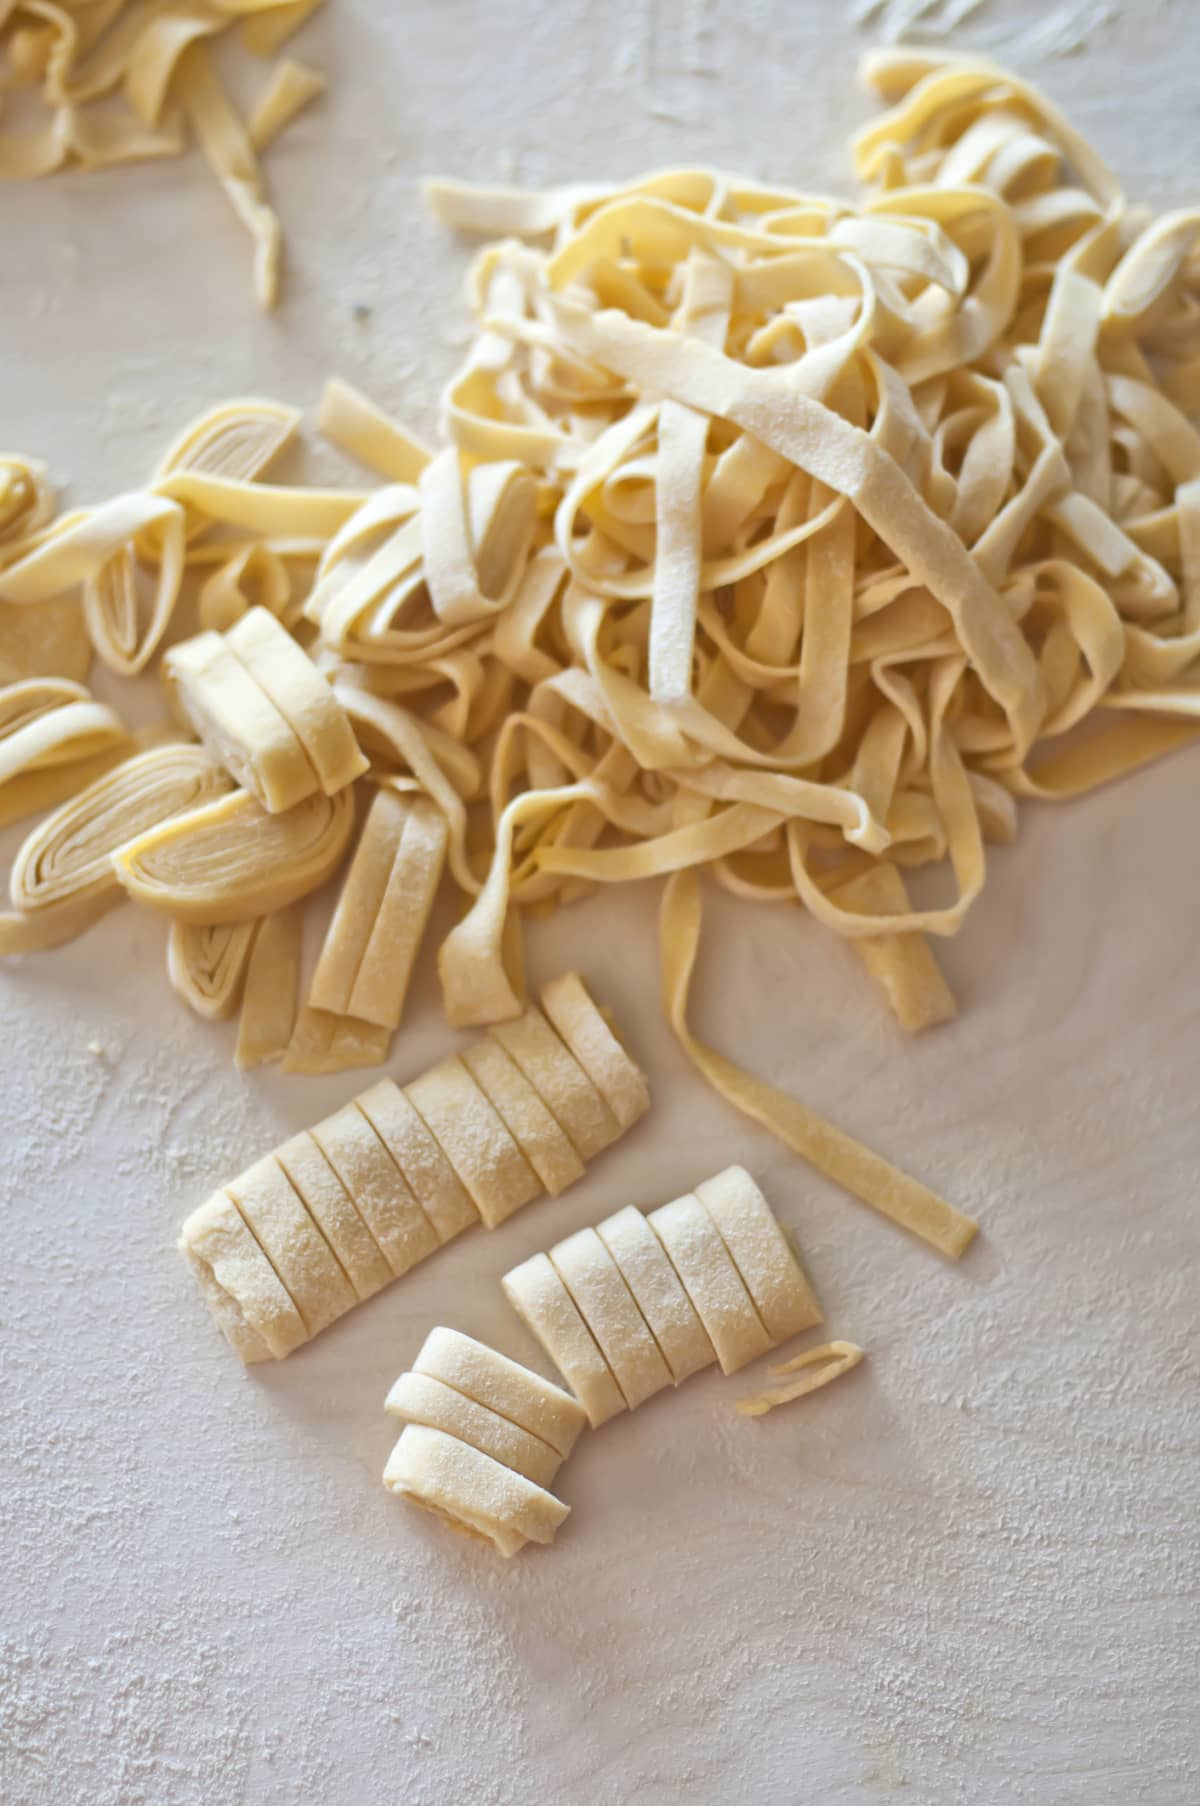 Freshly cut, homemade pasta noodles